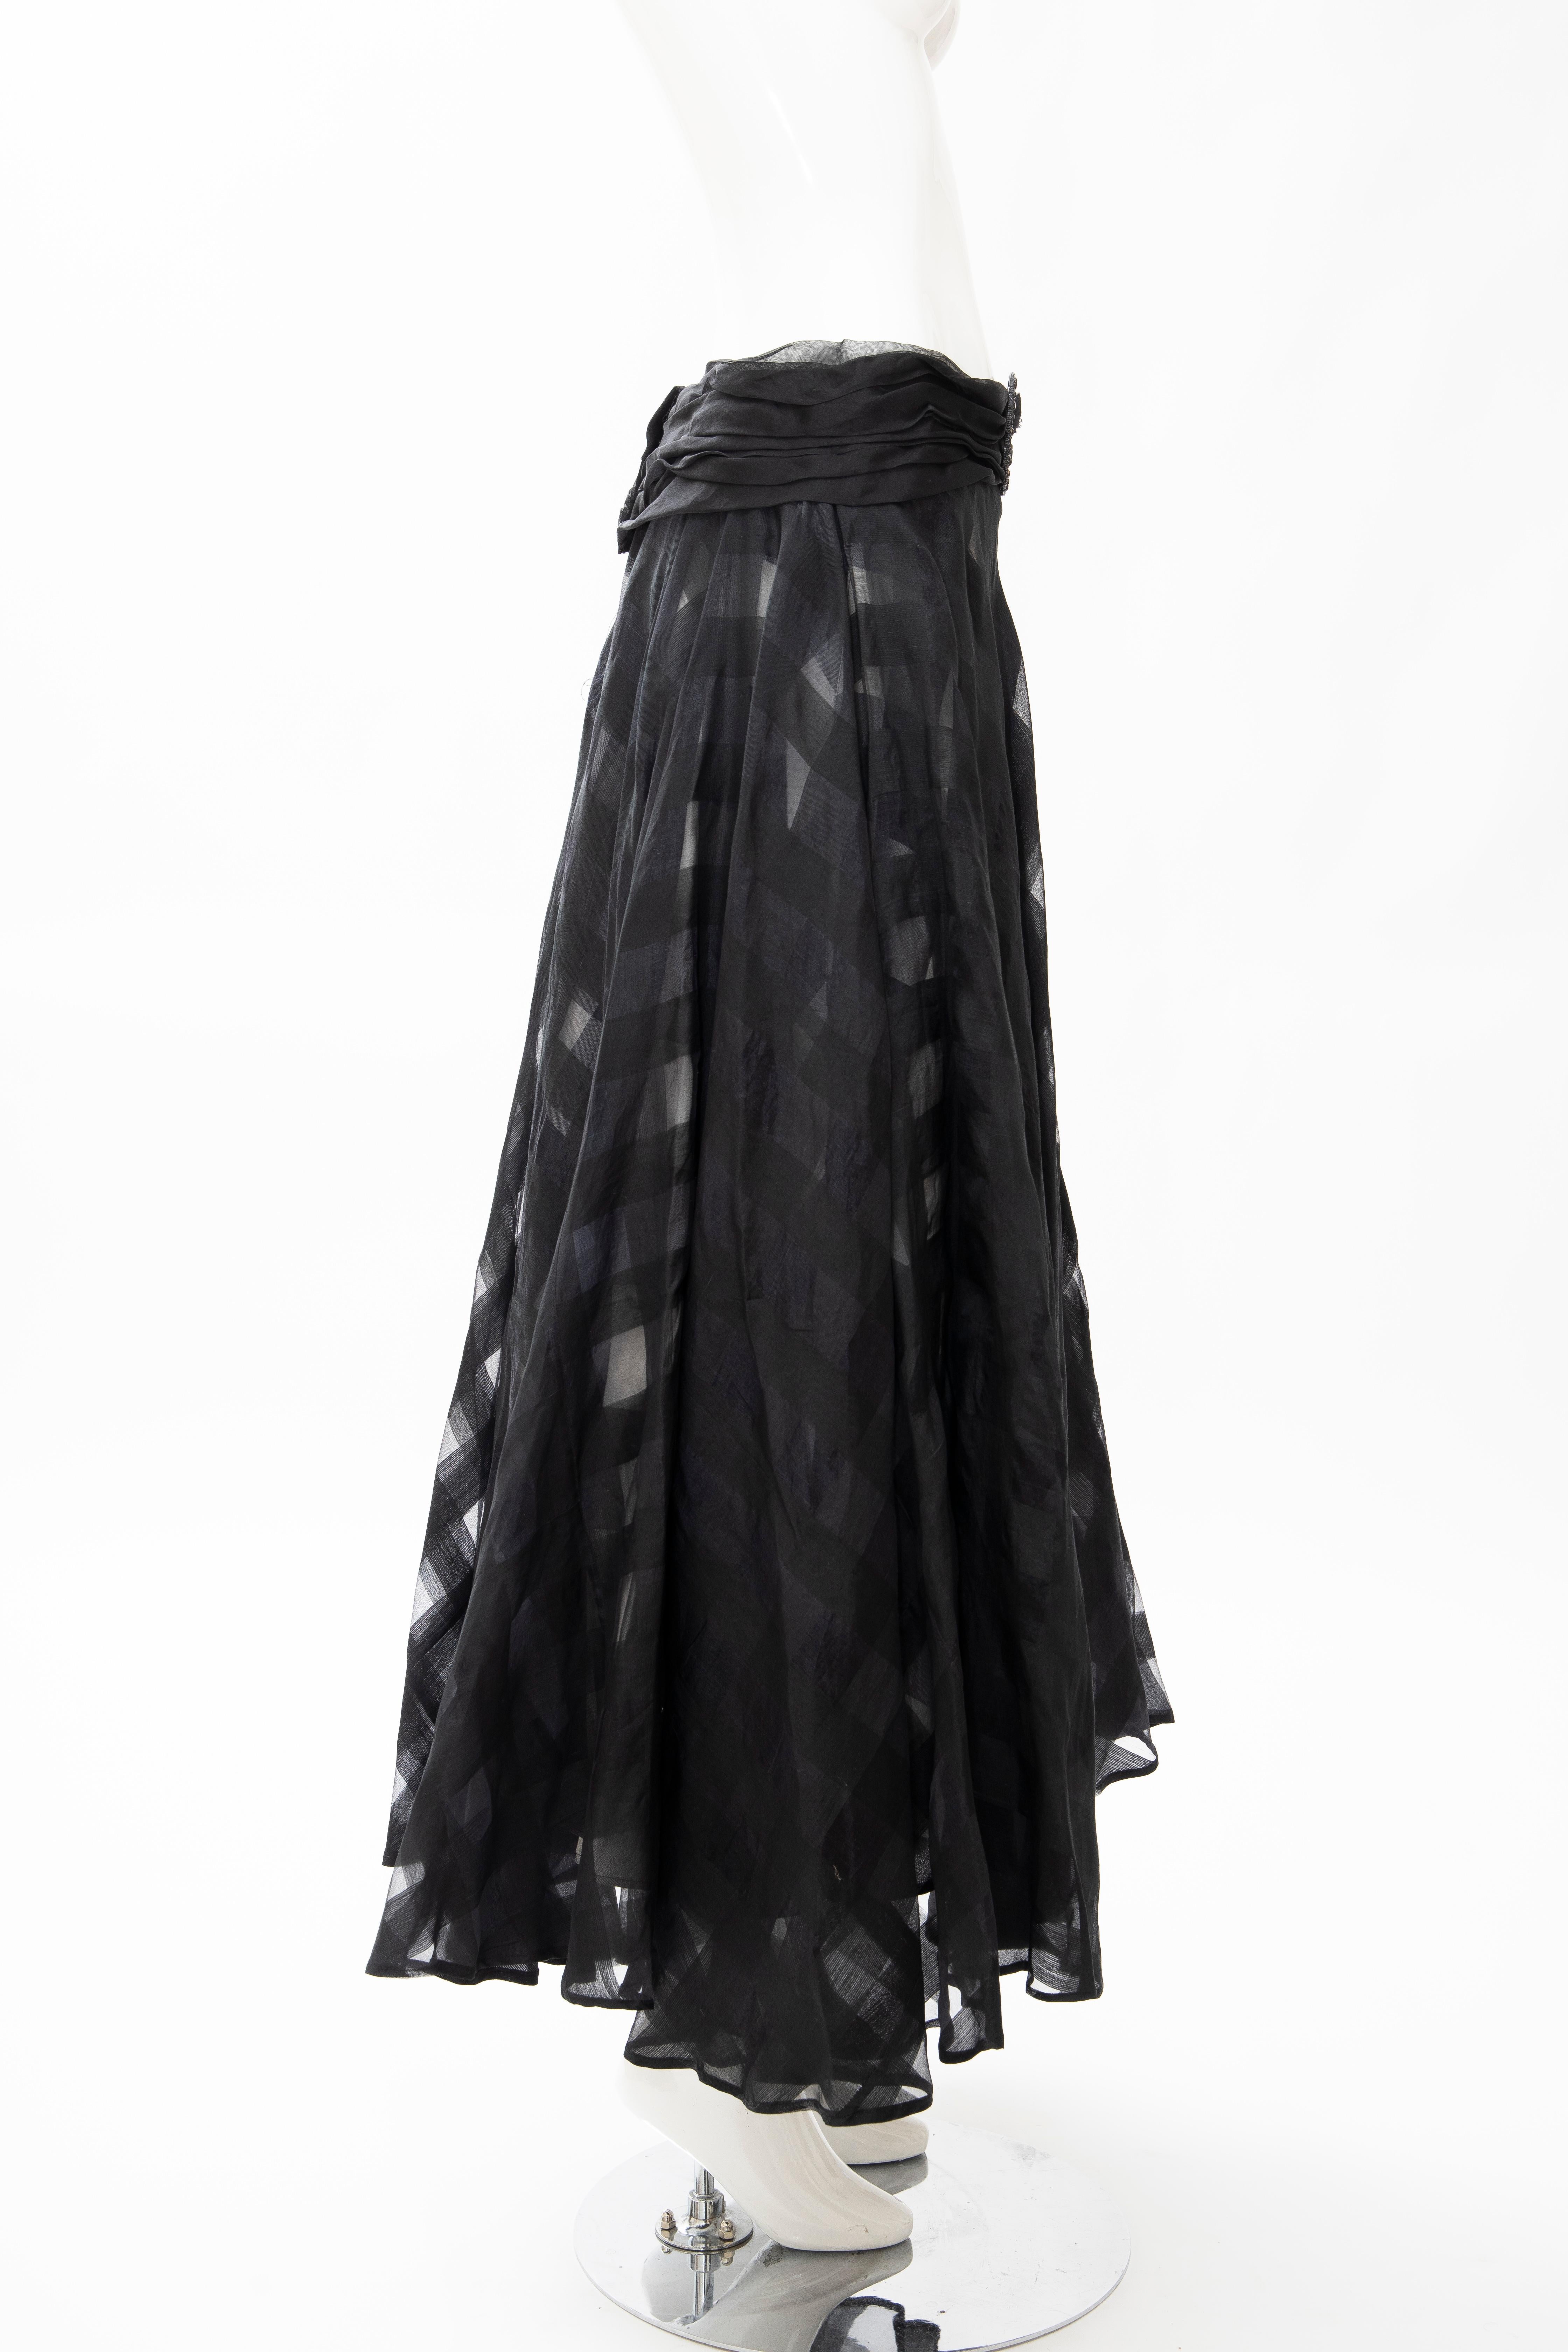 Olivier Theyskens Runway Black Silk Checkerboard Pattern Skirt, Spring 2000 For Sale 3